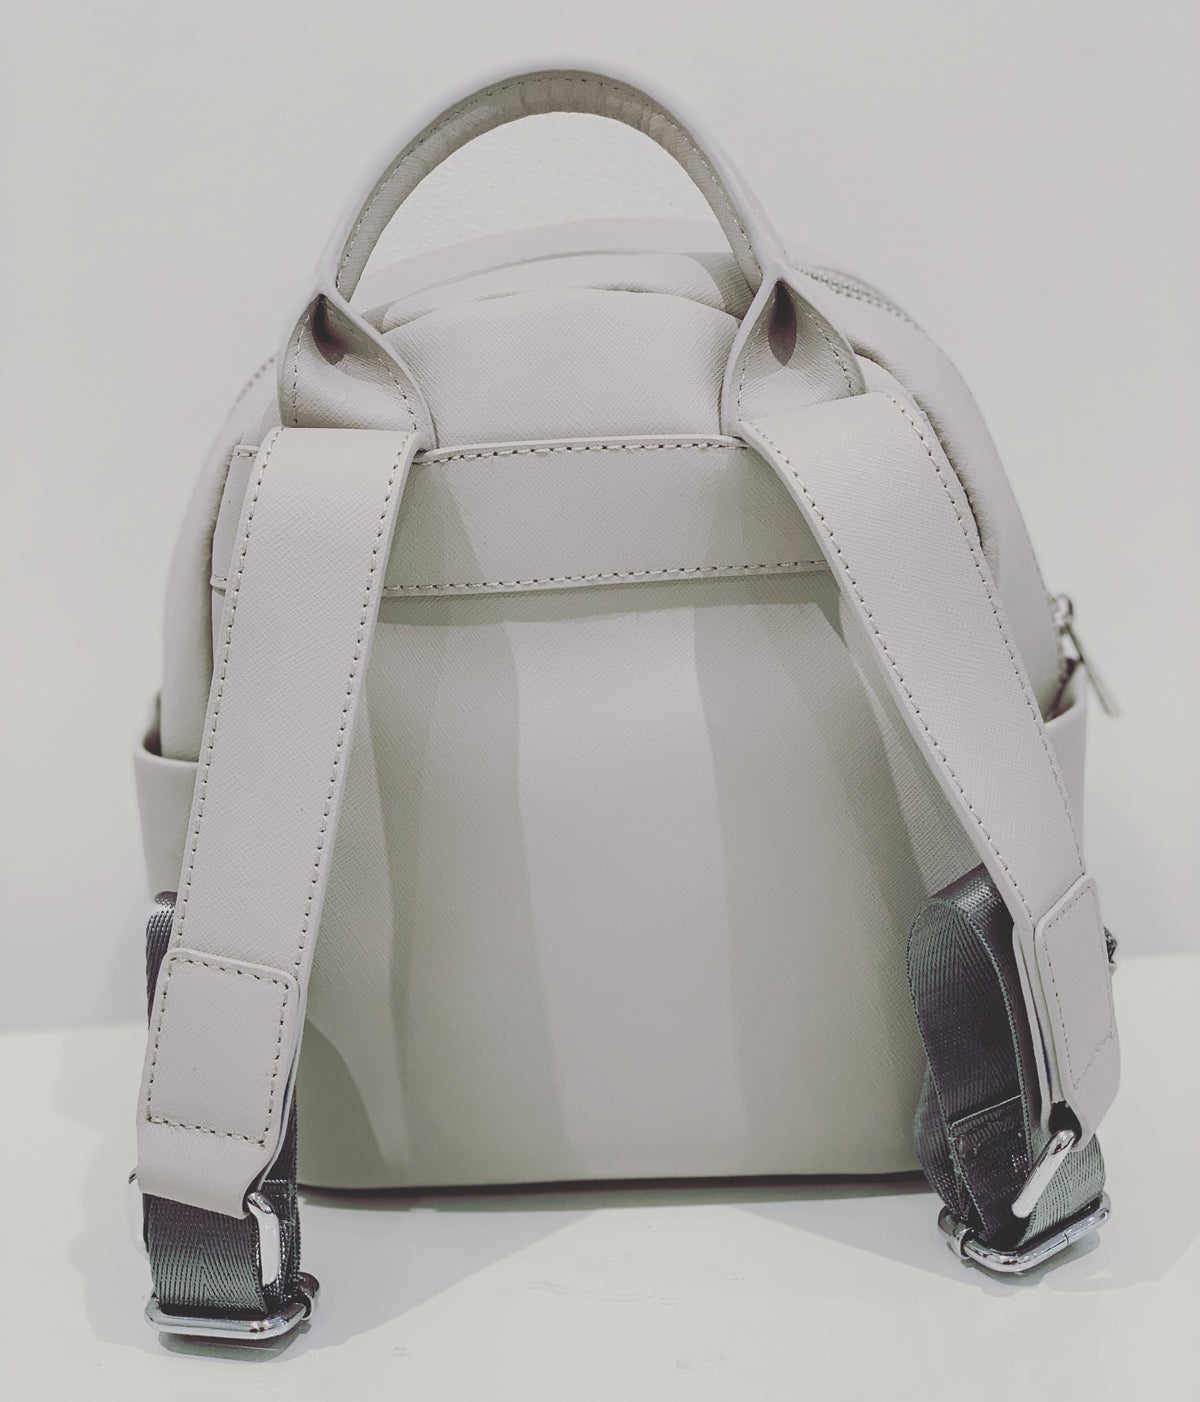 Mini Backpack - Light grey